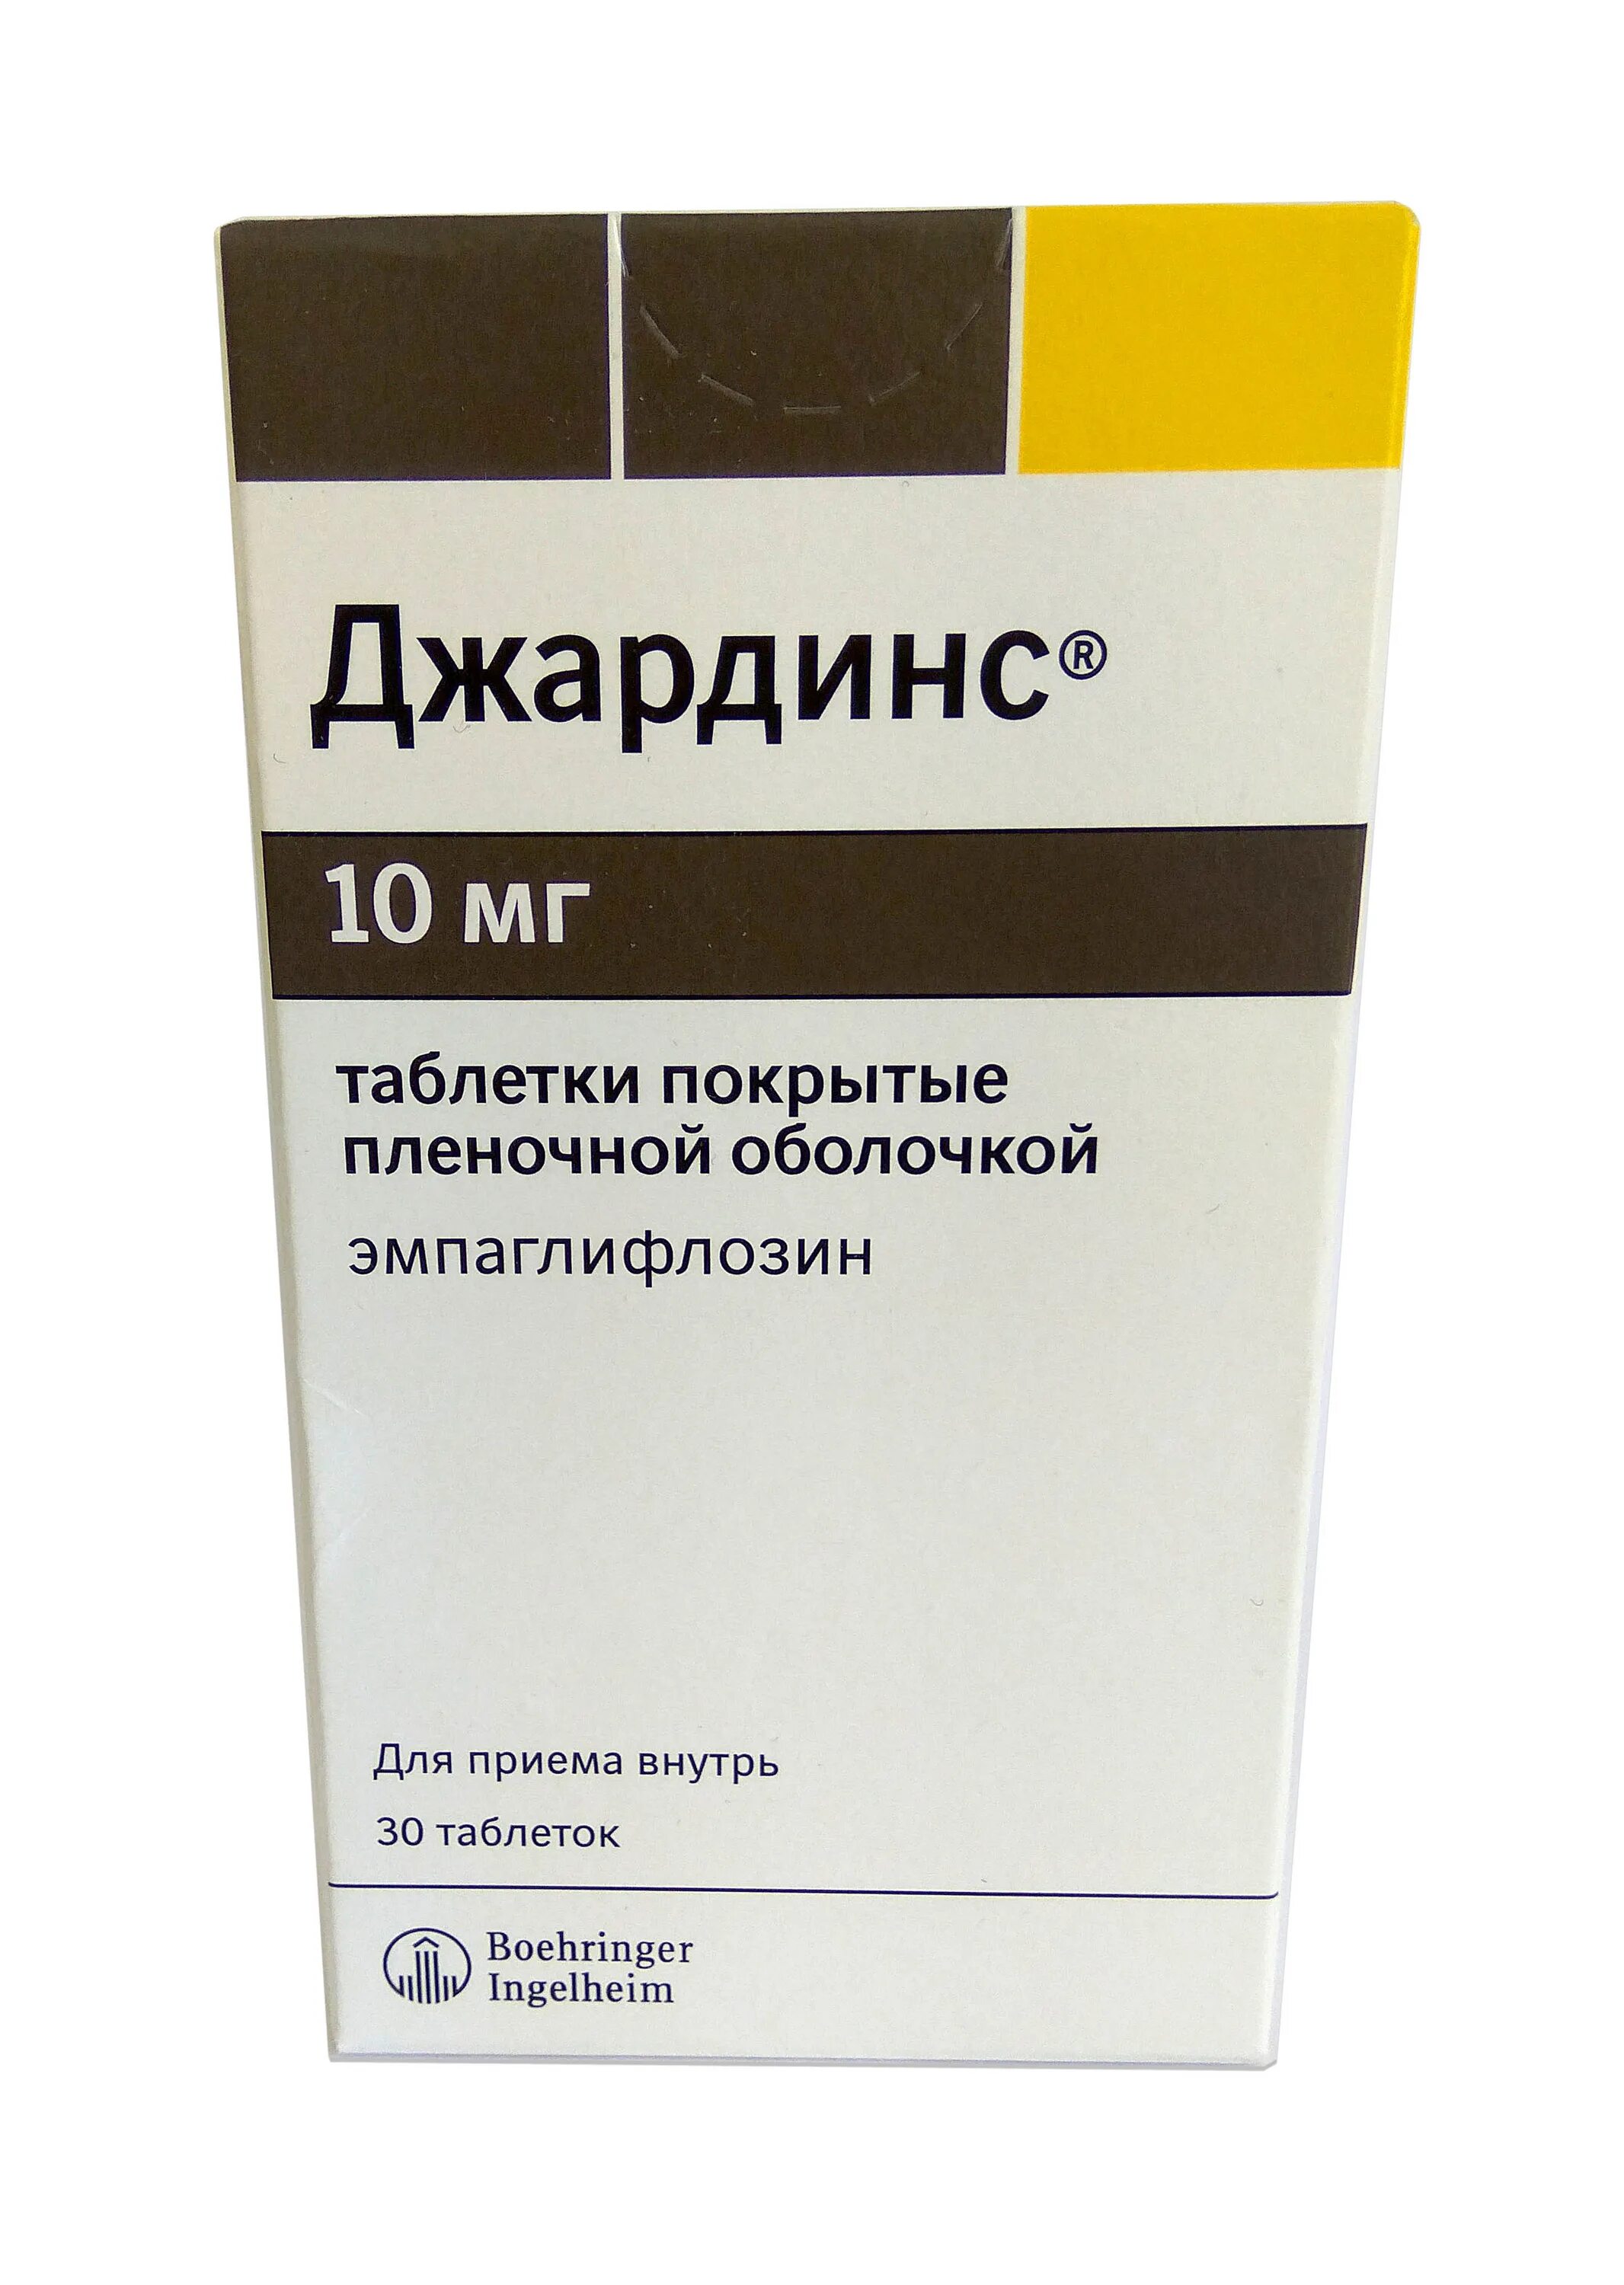 Джардинс 25. Эмпаглифлозин (Джардинс). Джардинс 10 мг. Джардинс 25 мг.